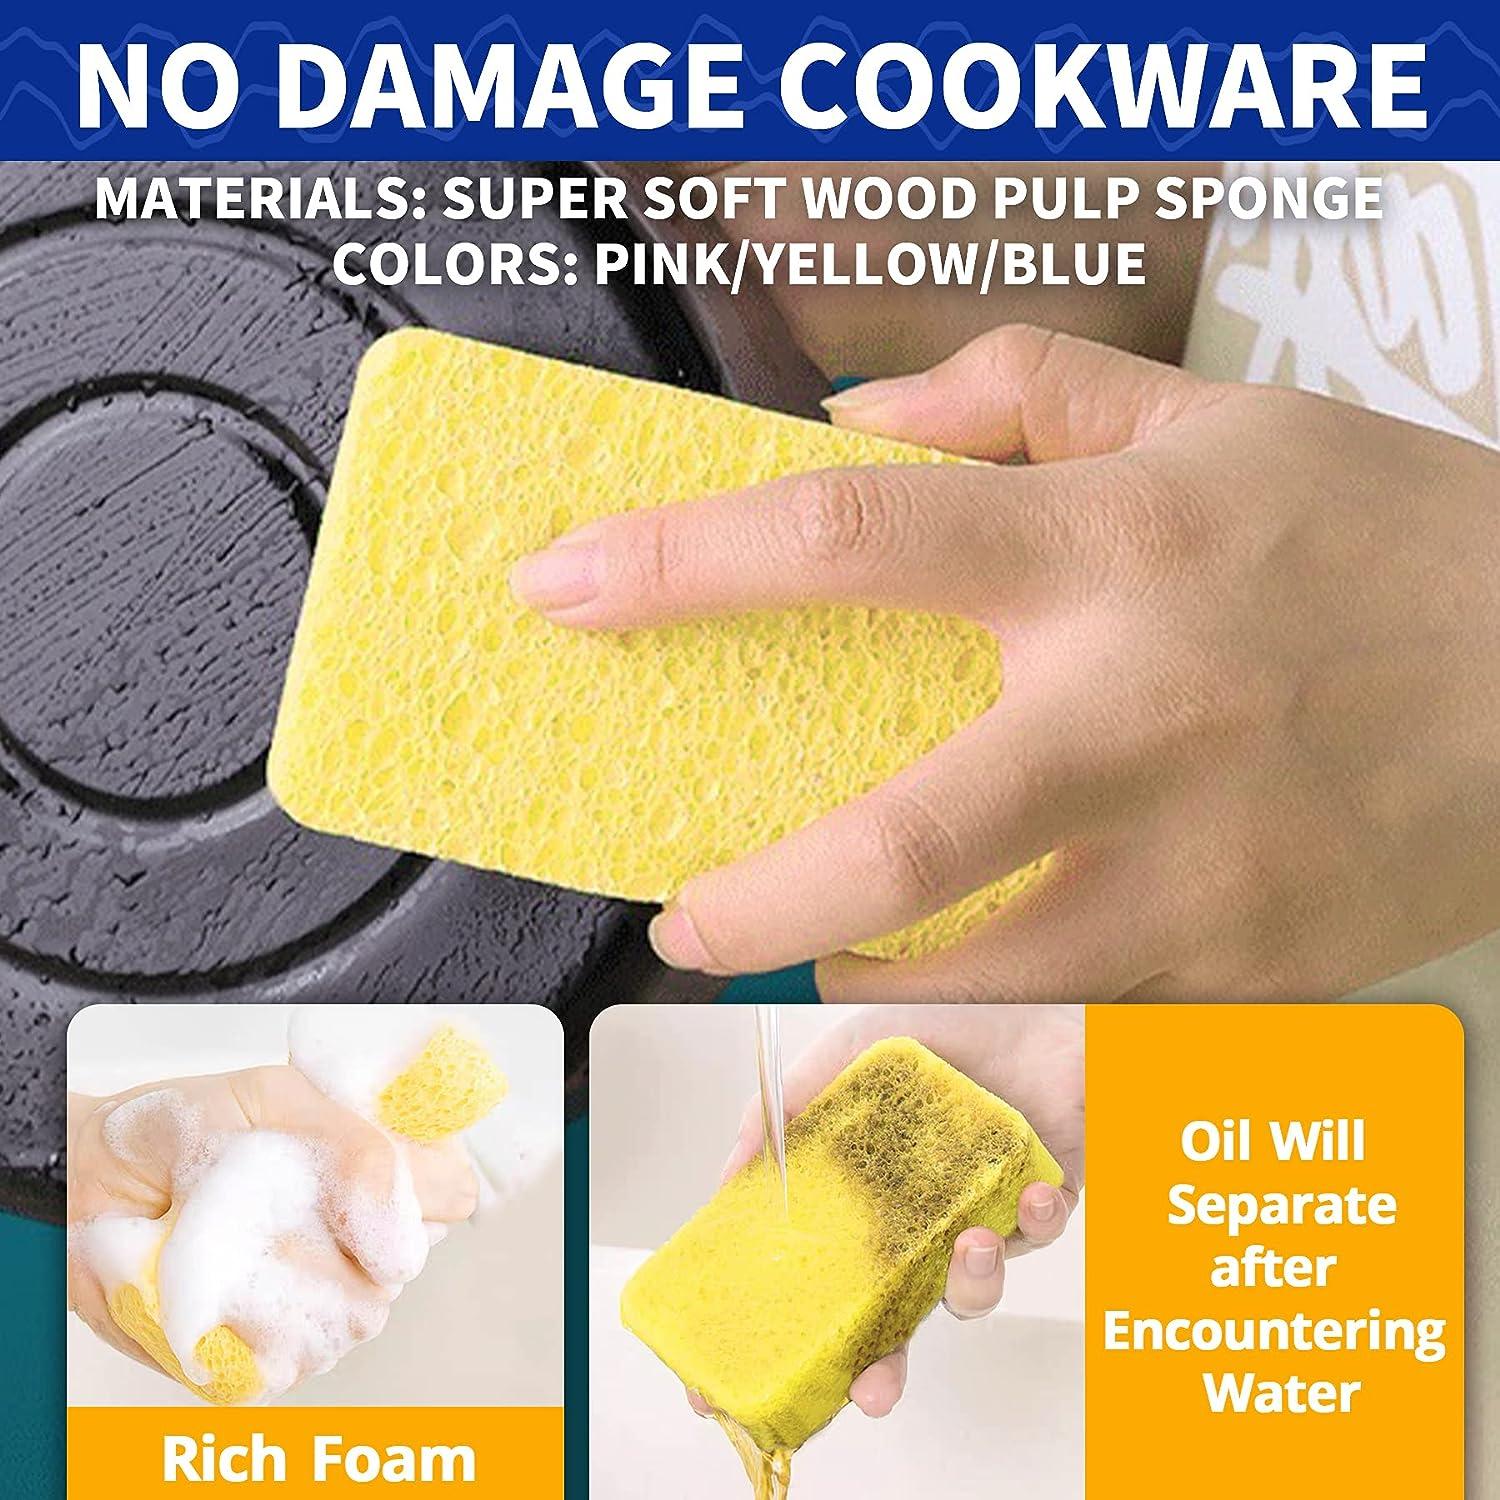 Celox 24 Pack Durable Kitchen Sponges, Natural Wood Pulp Sponges for Dishes, Absorbent Cellulose Sponges Bulk for Cleaning Kitchen, Bathroom, DIY